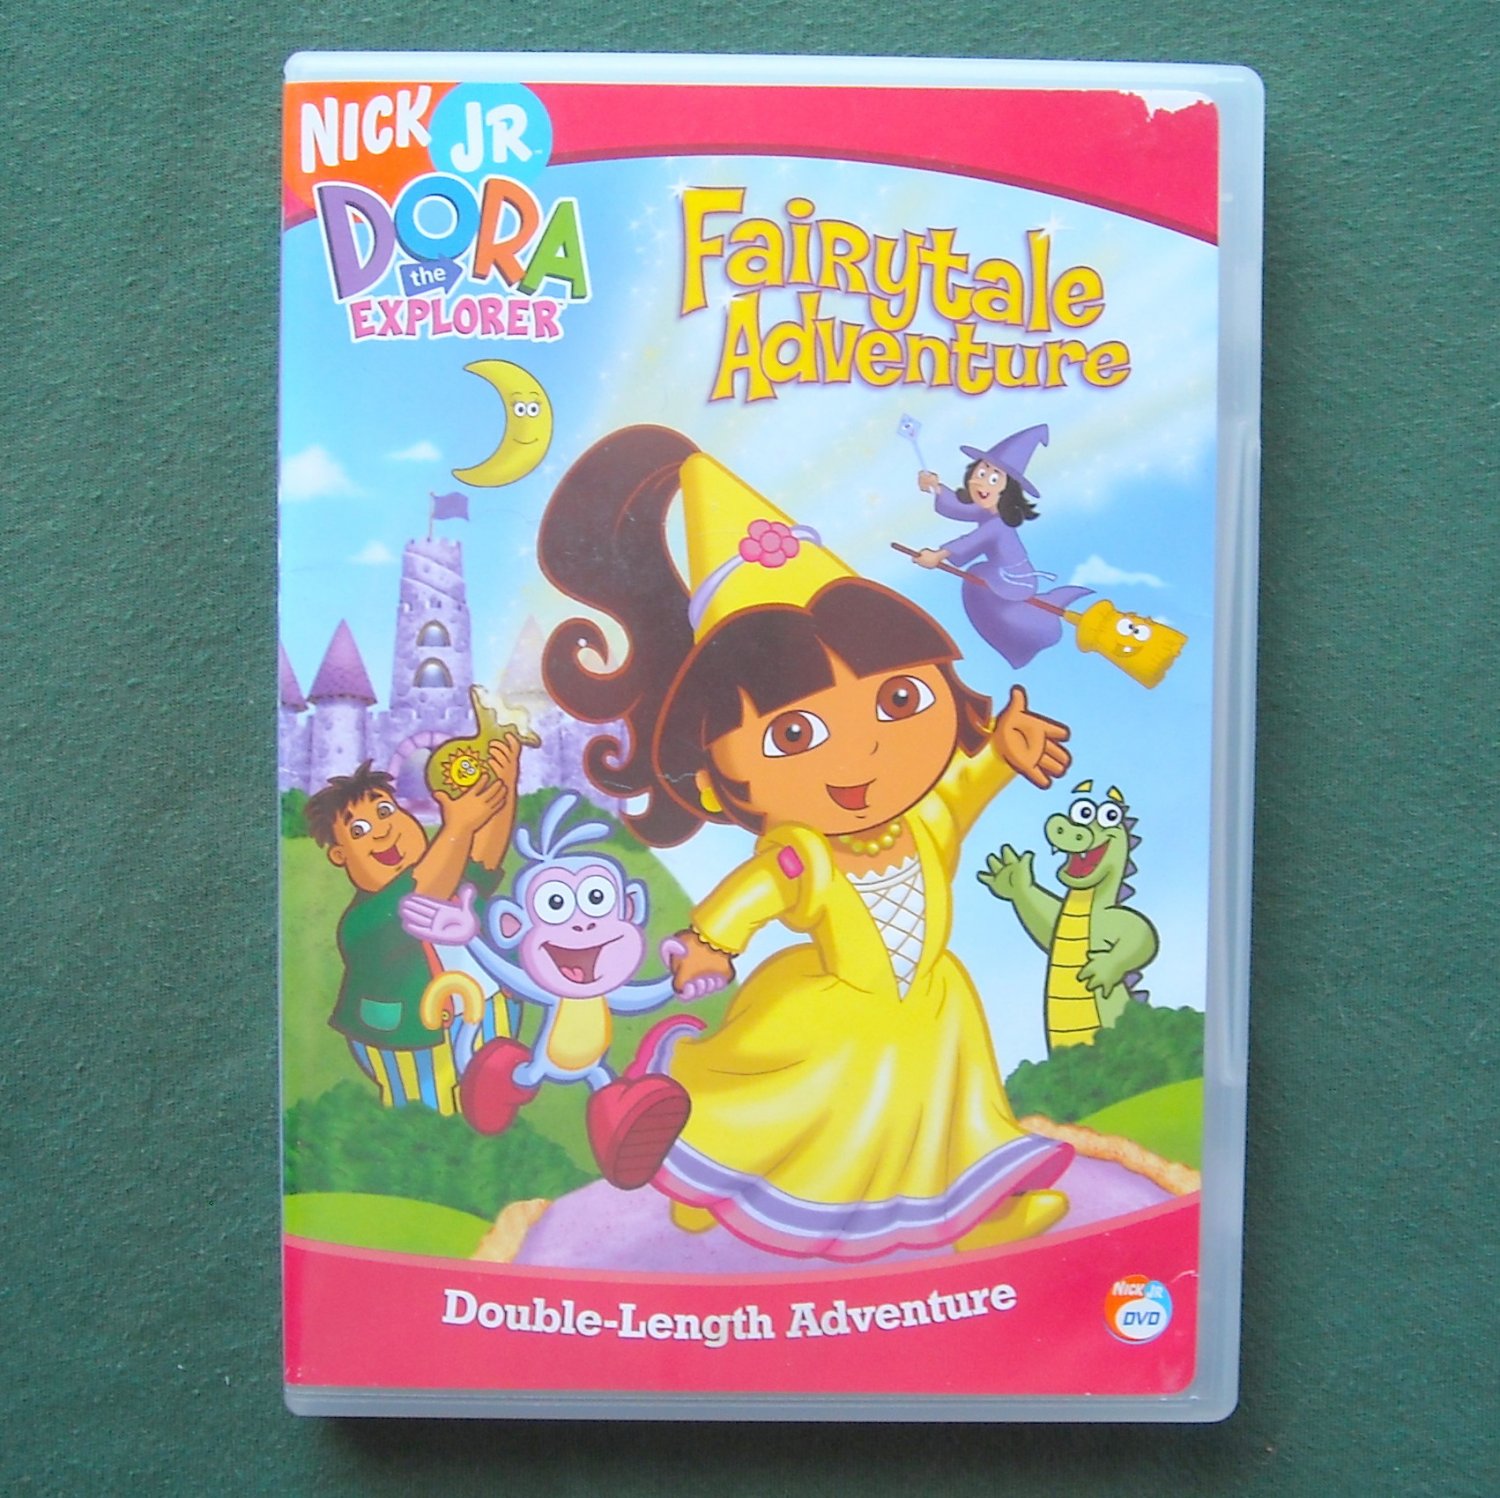 Nick Jr. Dora the Explorer Fairytale Adventure DVD